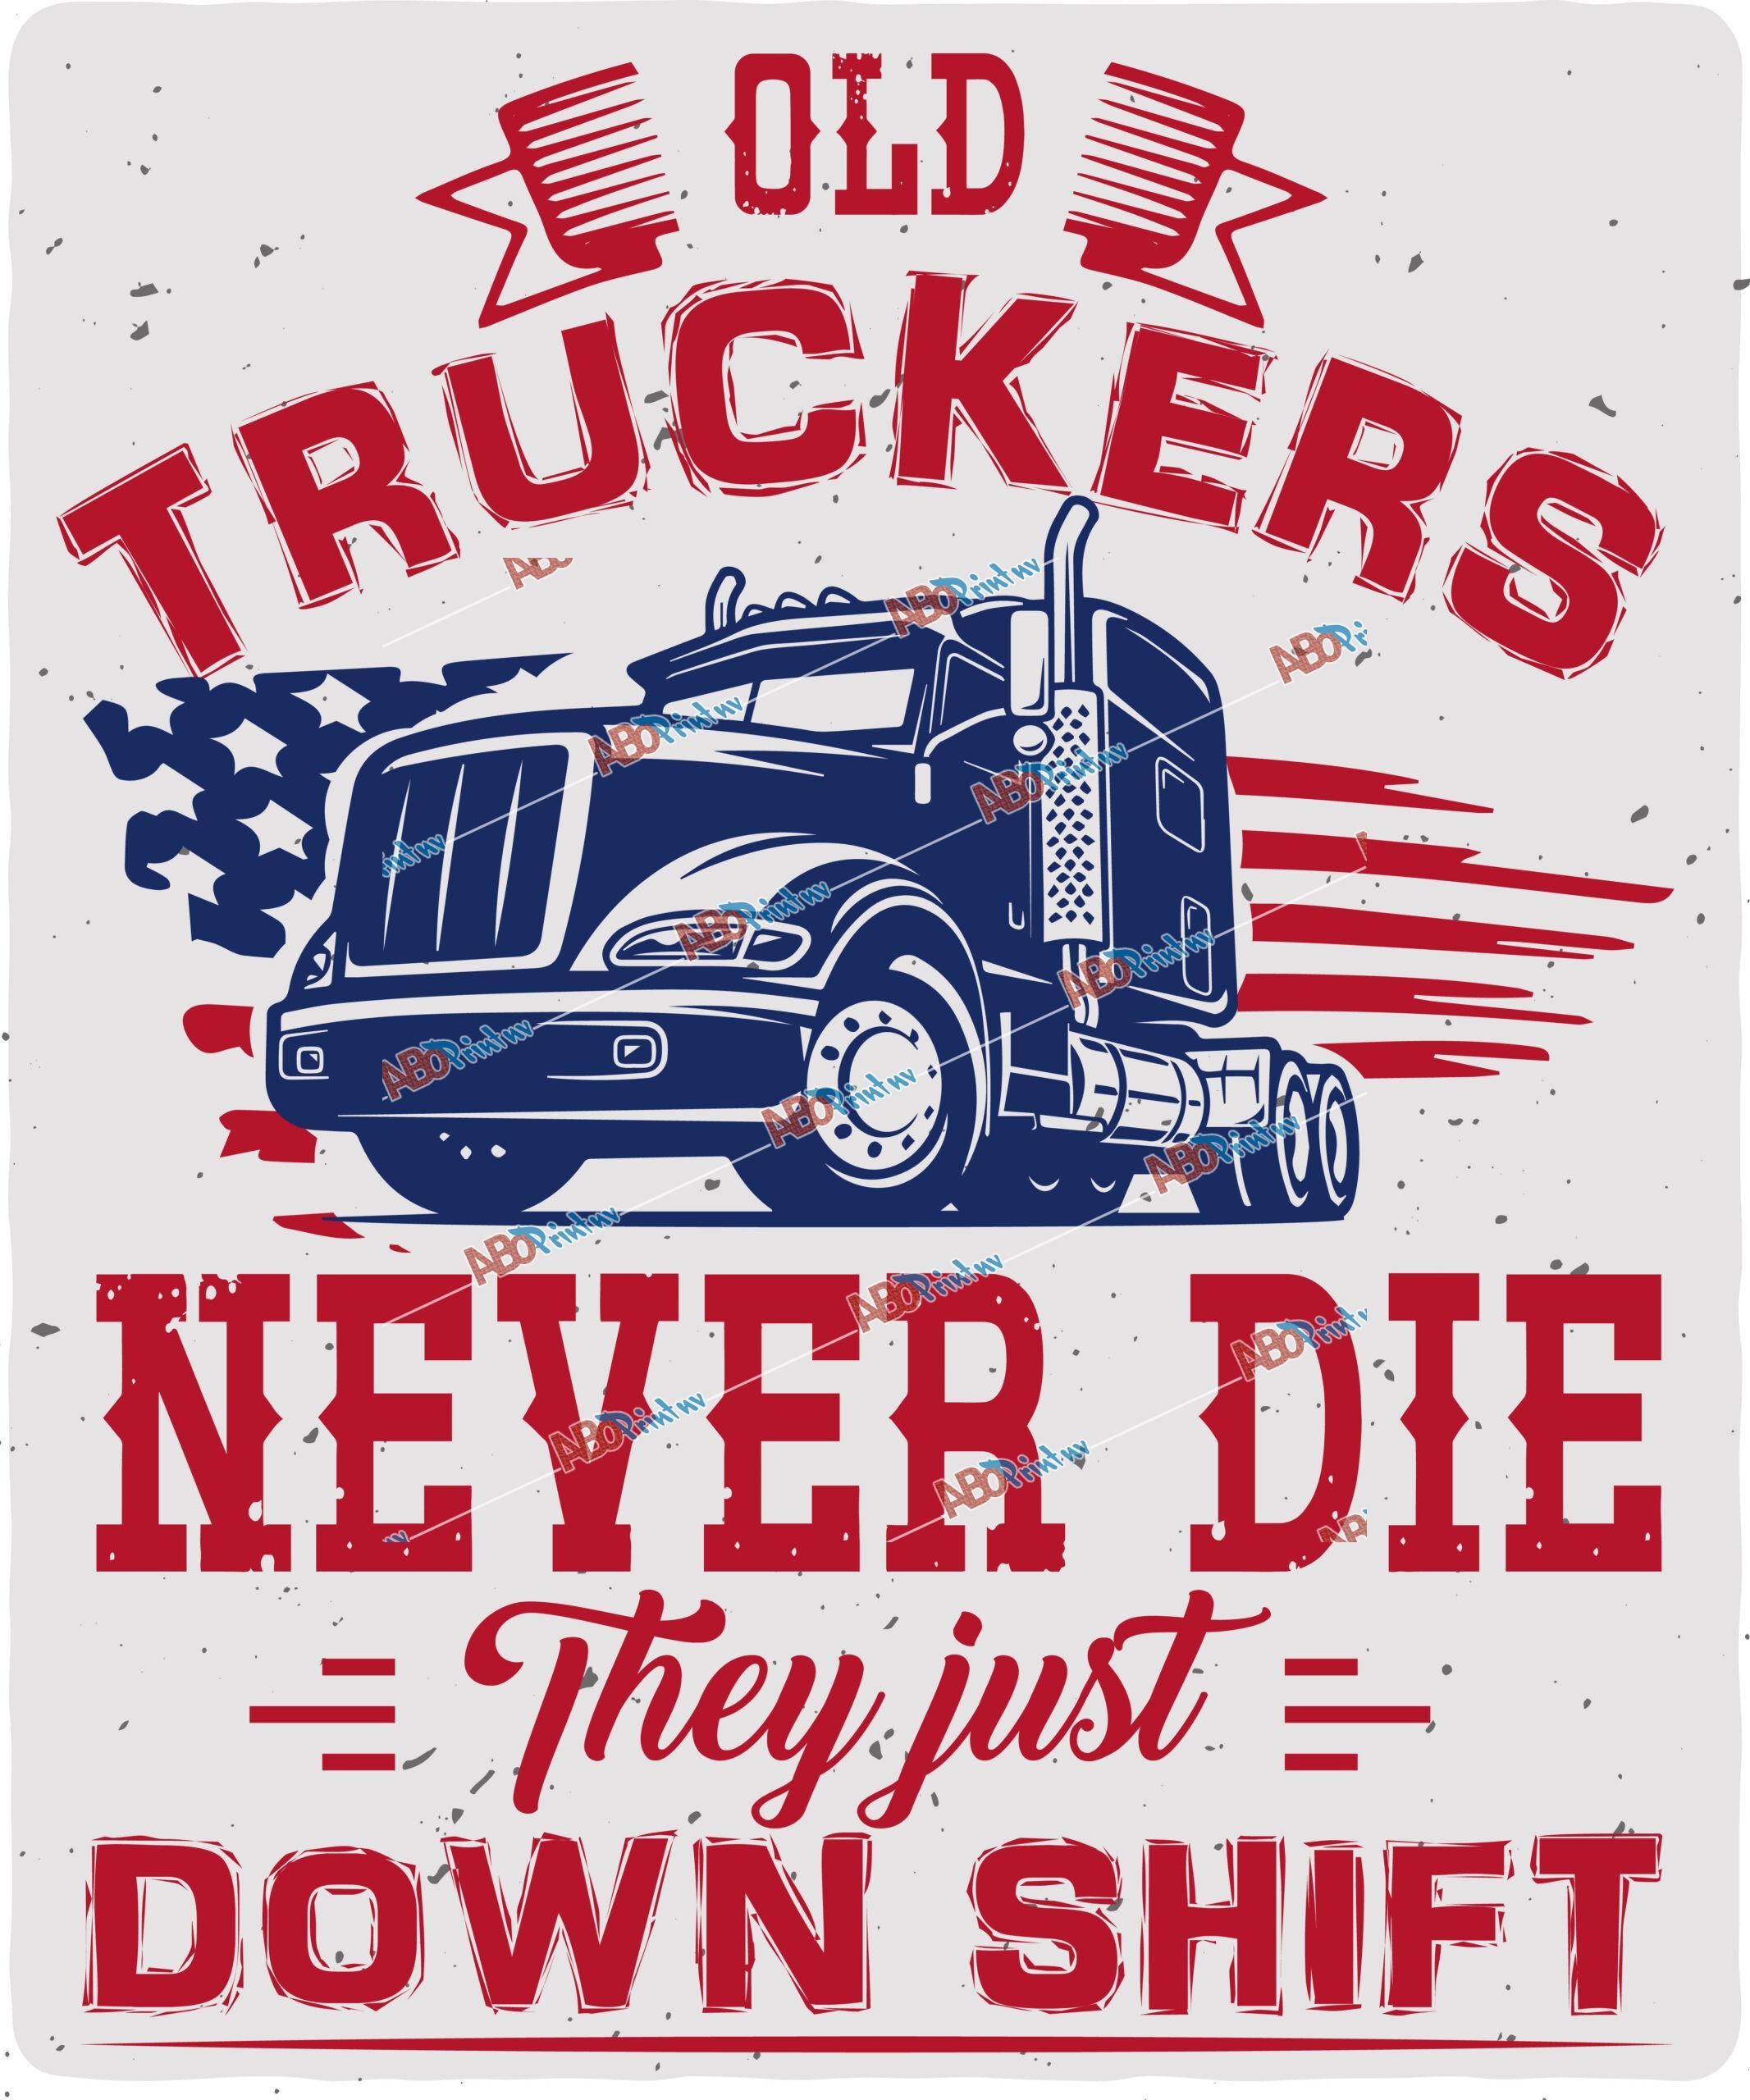 American by birth trucker by choice